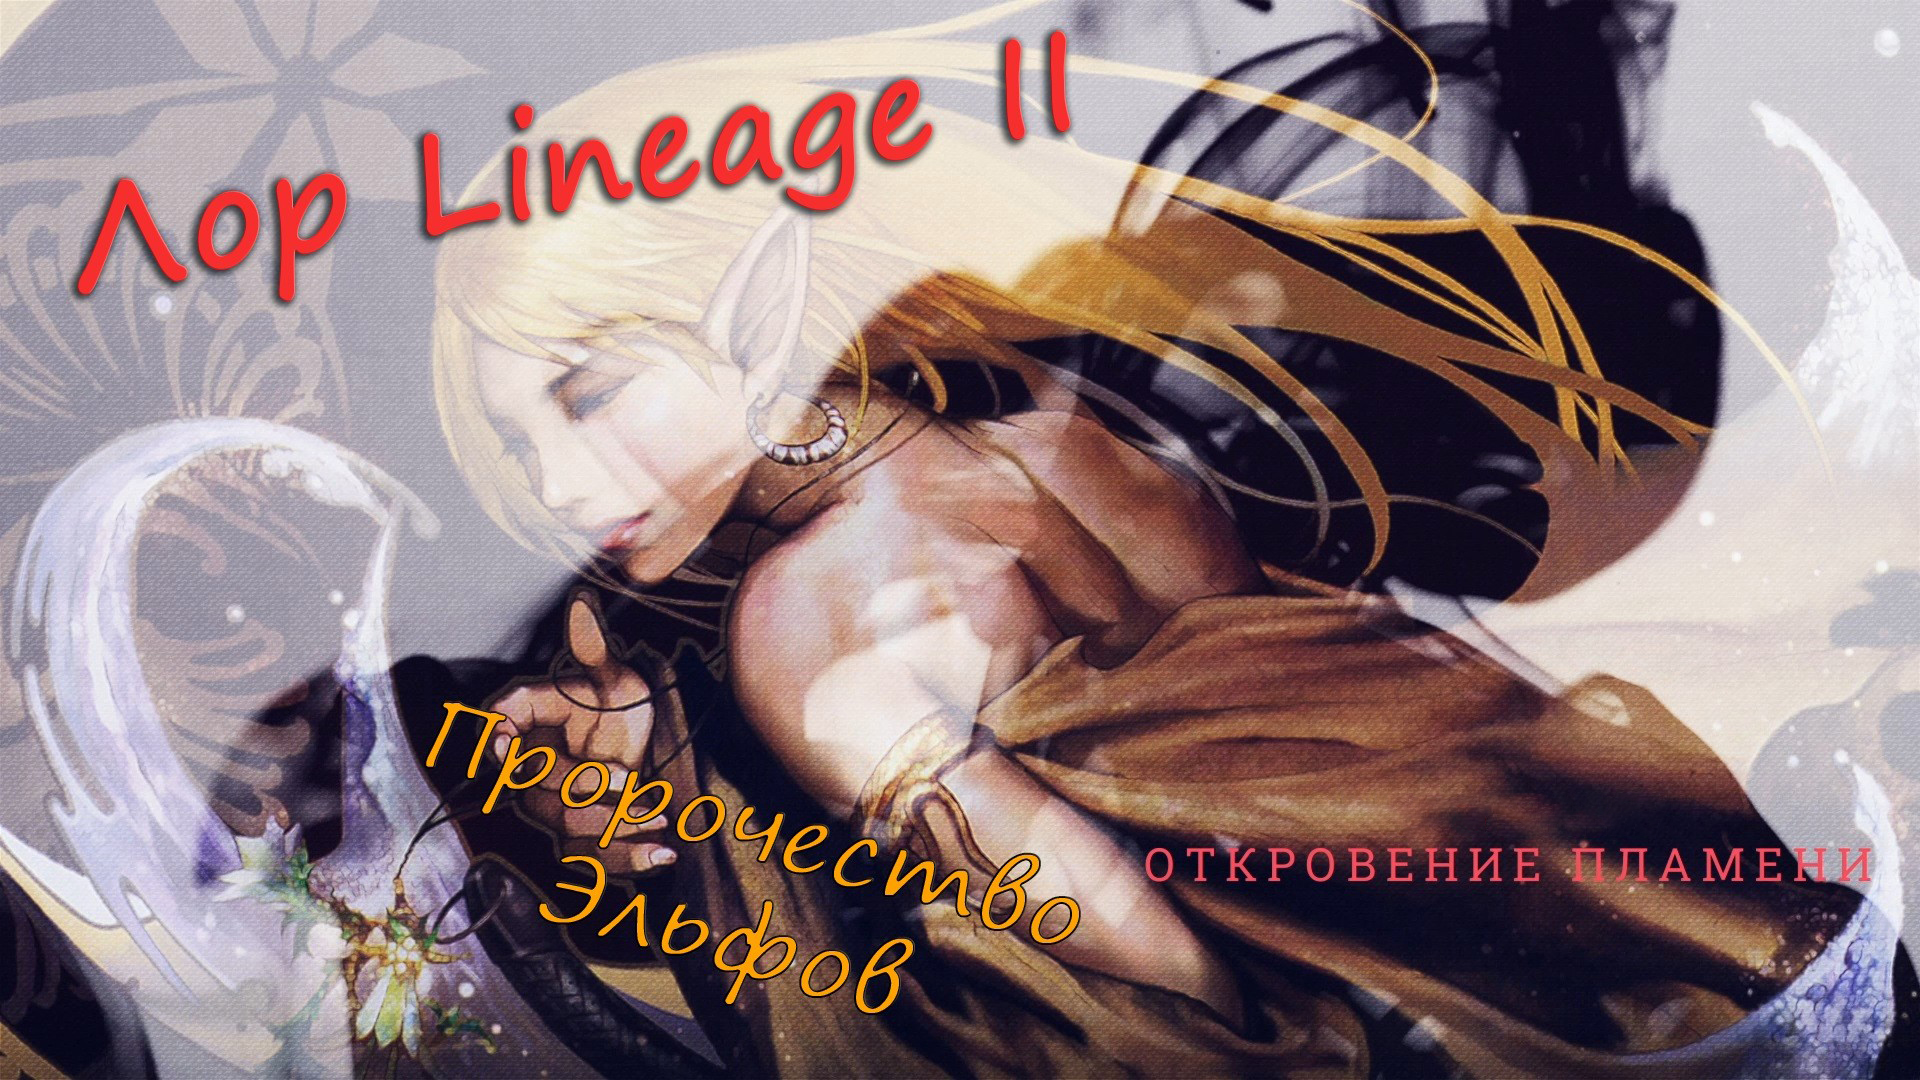 Lineage II: Лор Lineage II: Эльфийское пророчество - 